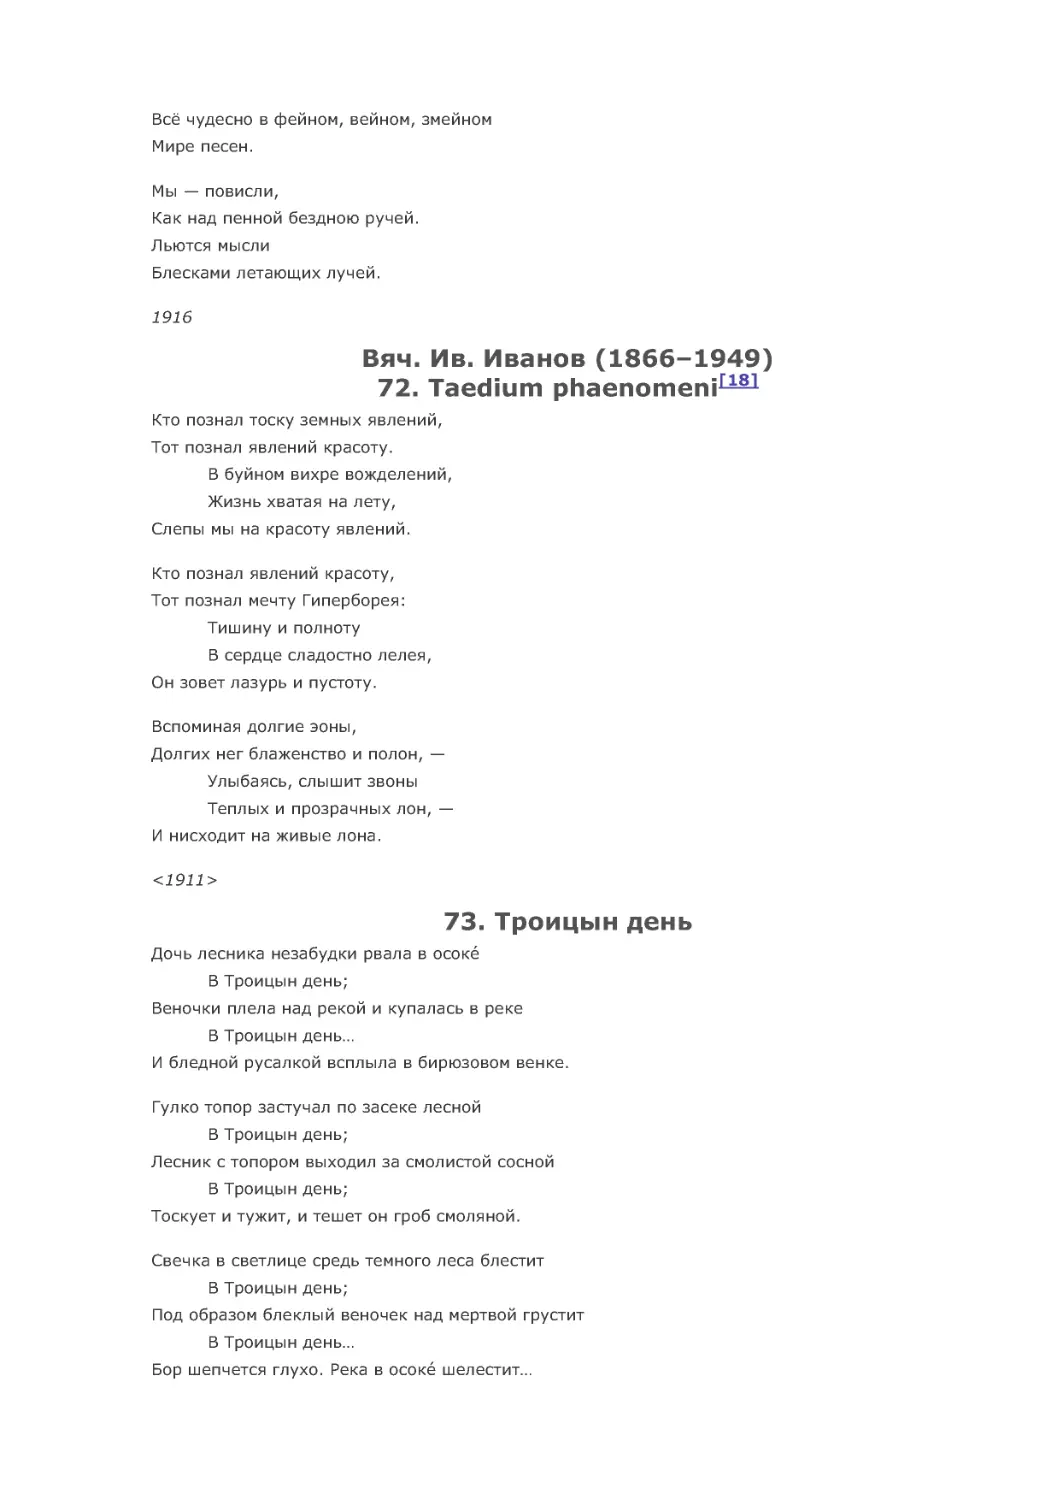 72. Taedium phaenomeni[18]
73. Троицын день